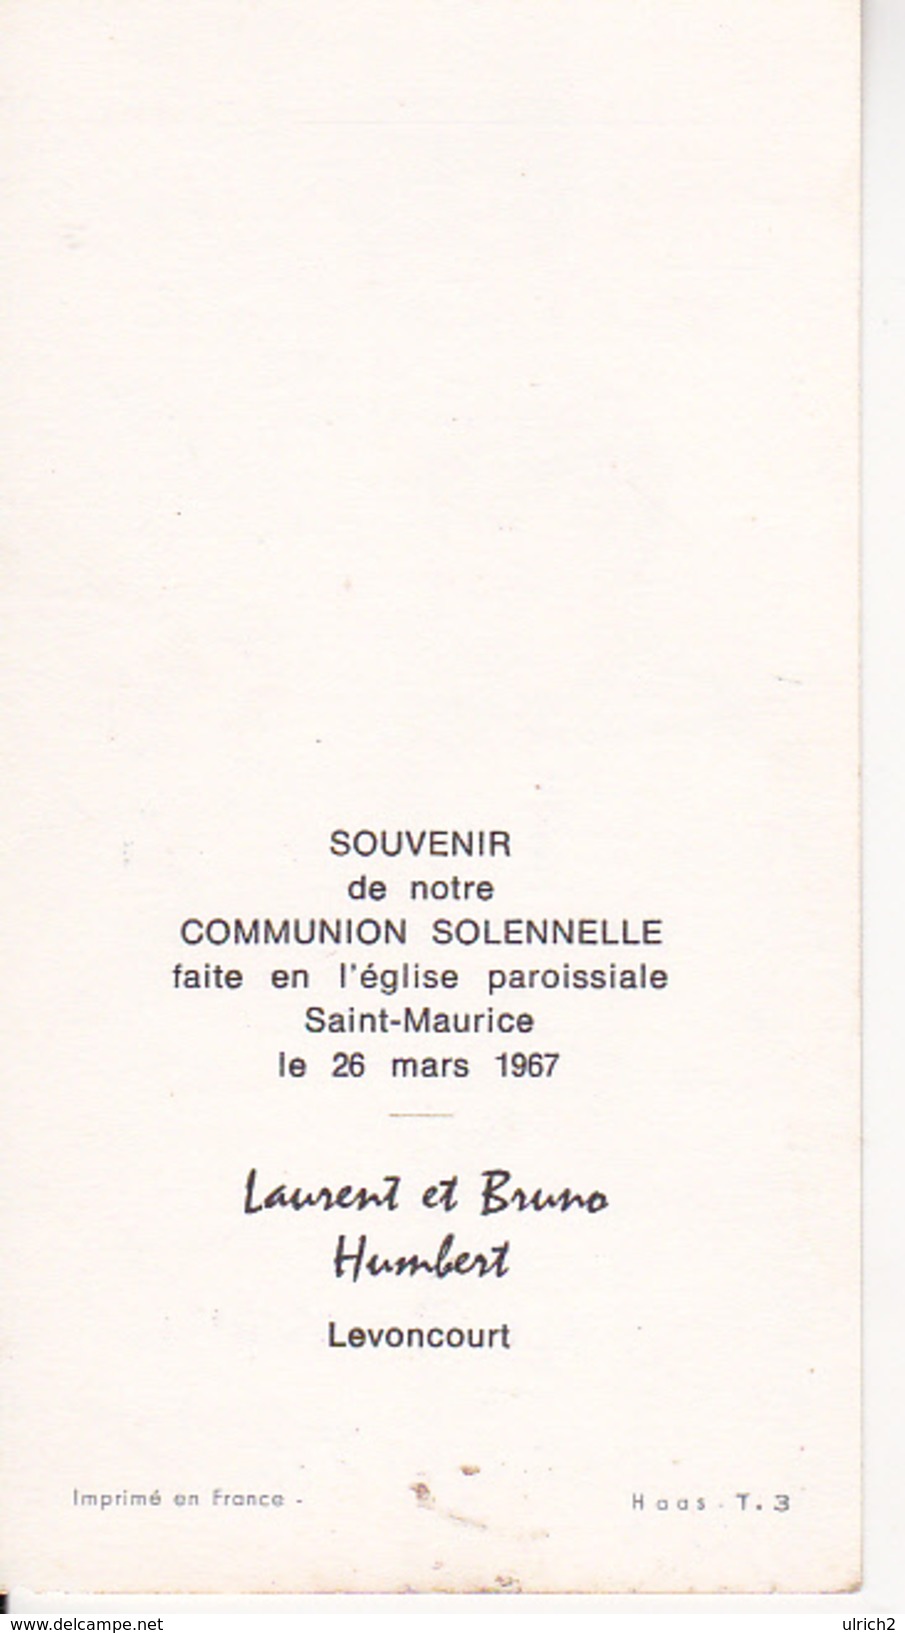 Andachtsbild - Image Pieuse - Communion - St-Maurice - 1967 - Laurent Et Bruno Humbert - Levoncourt - 6*11cm (29438) - Andachtsbilder